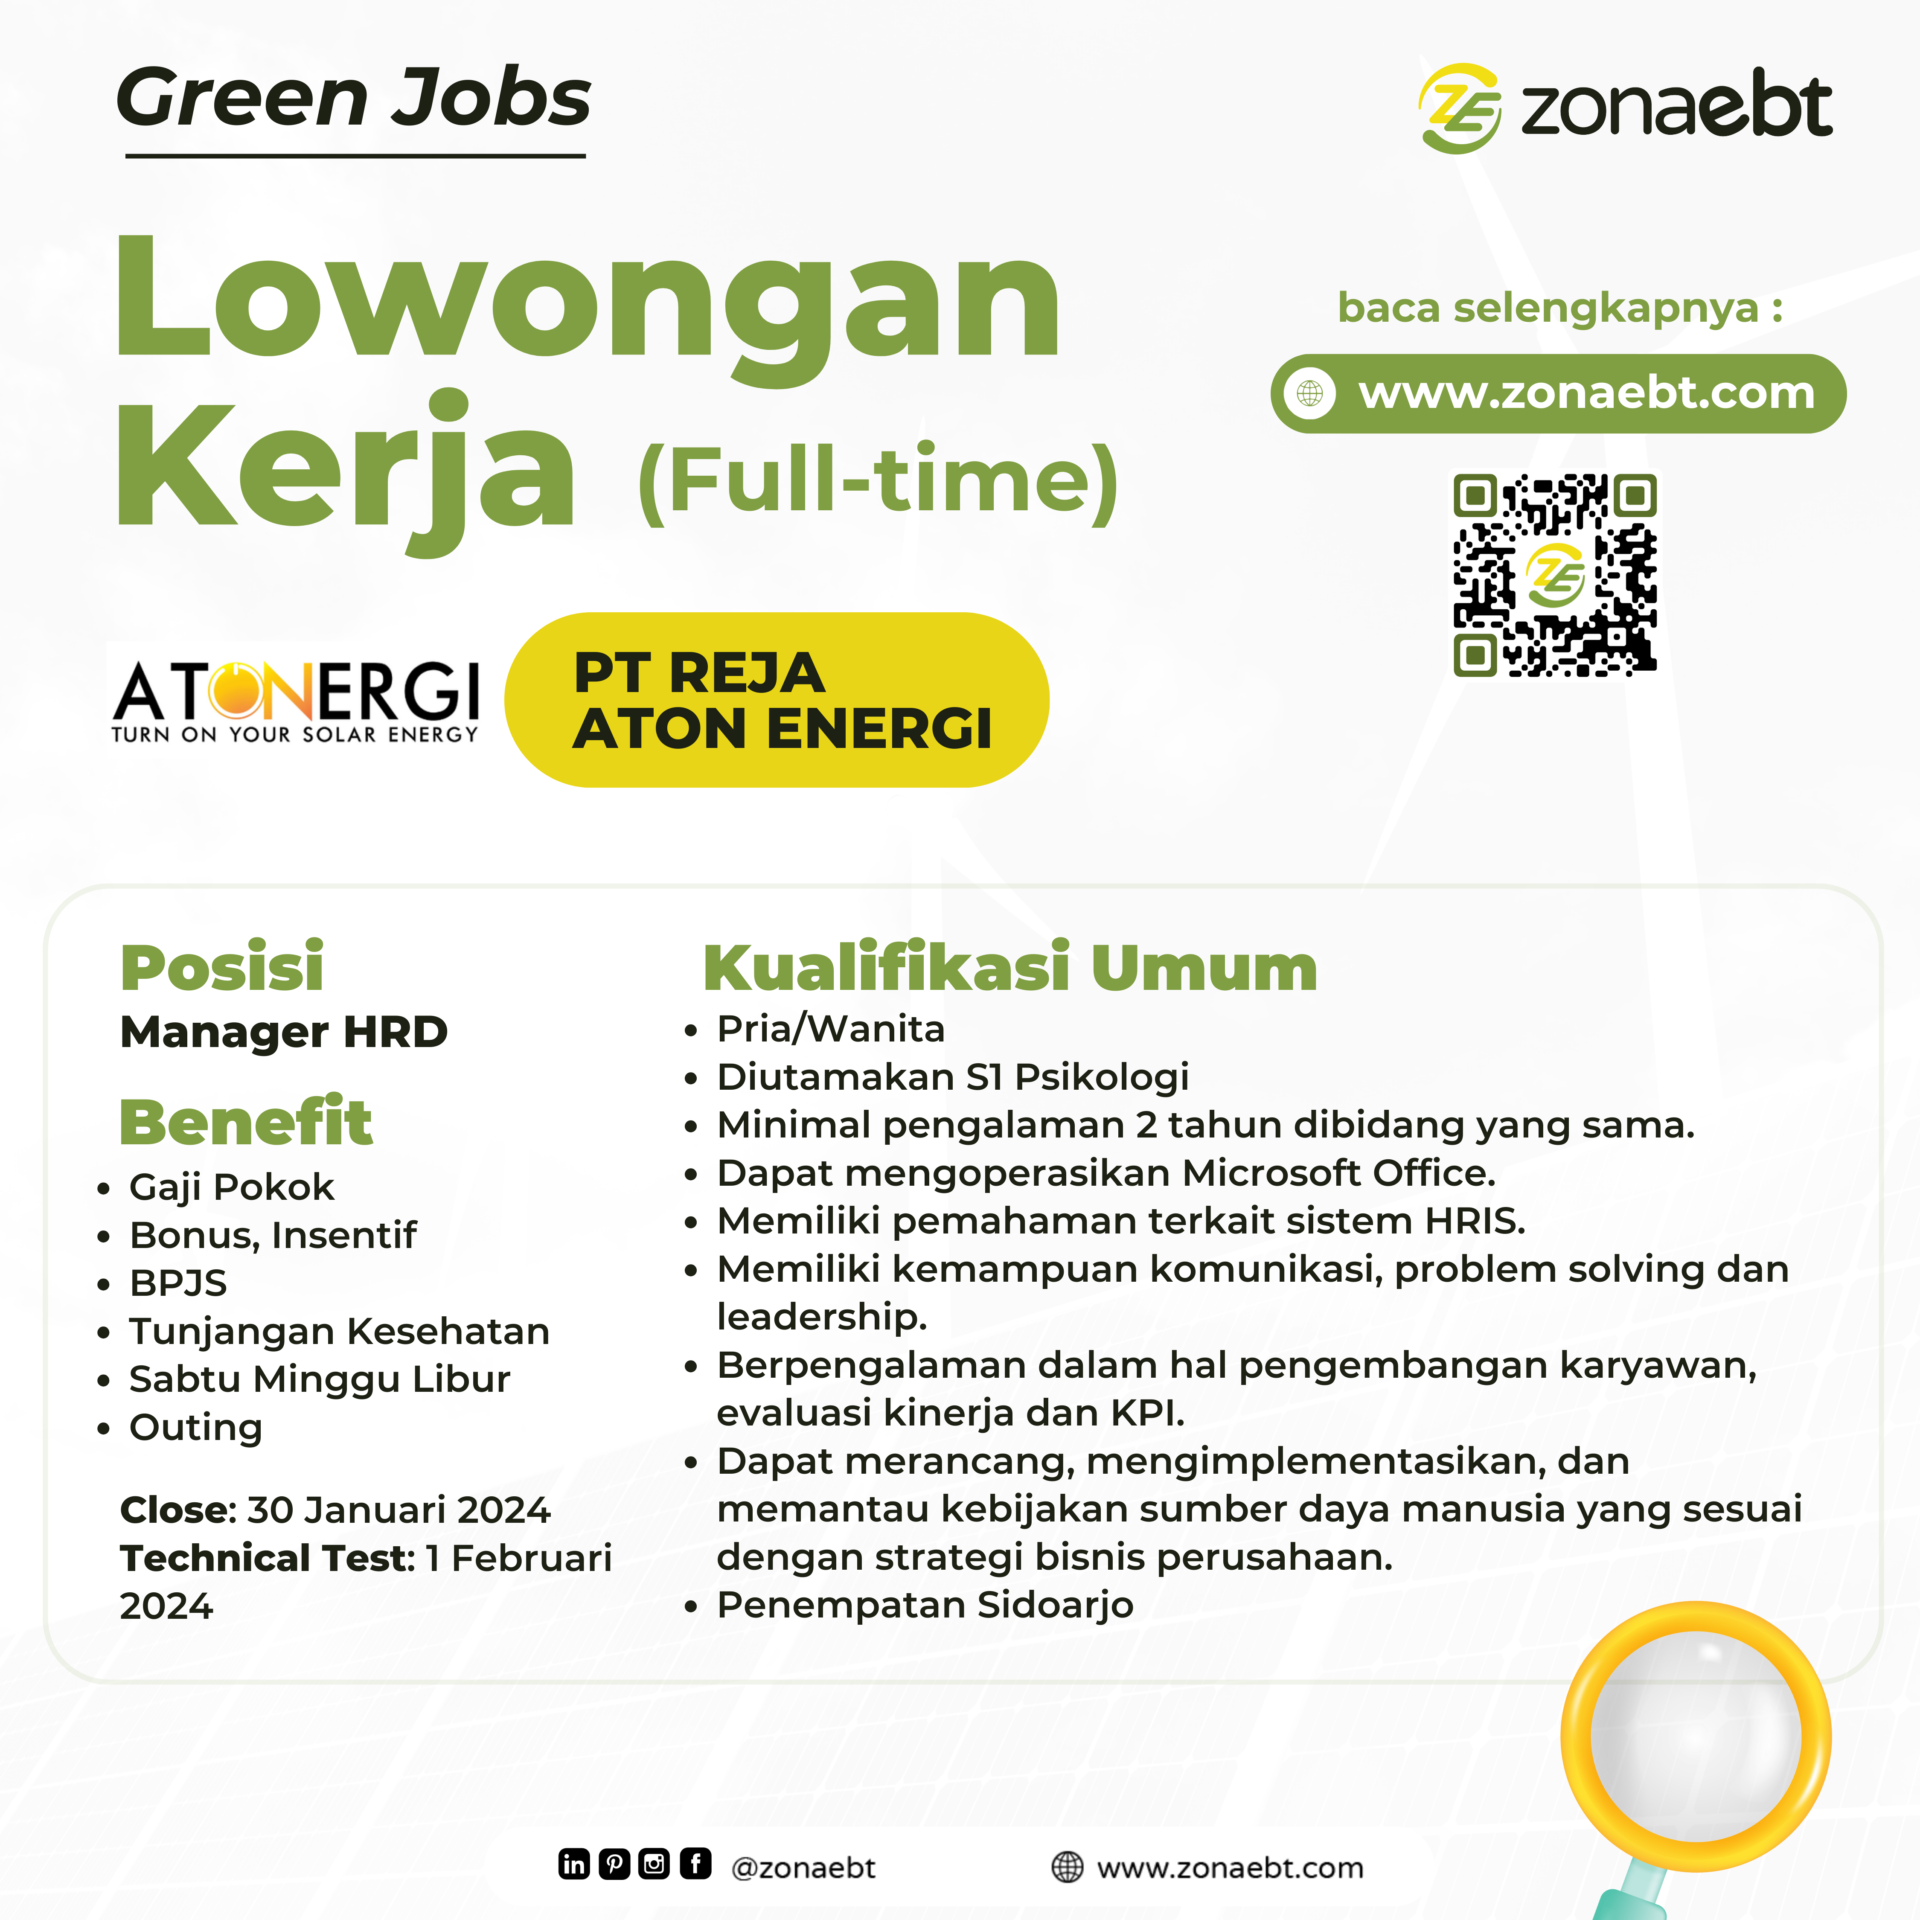 Post Manager HRD green jobs zonaebt.com